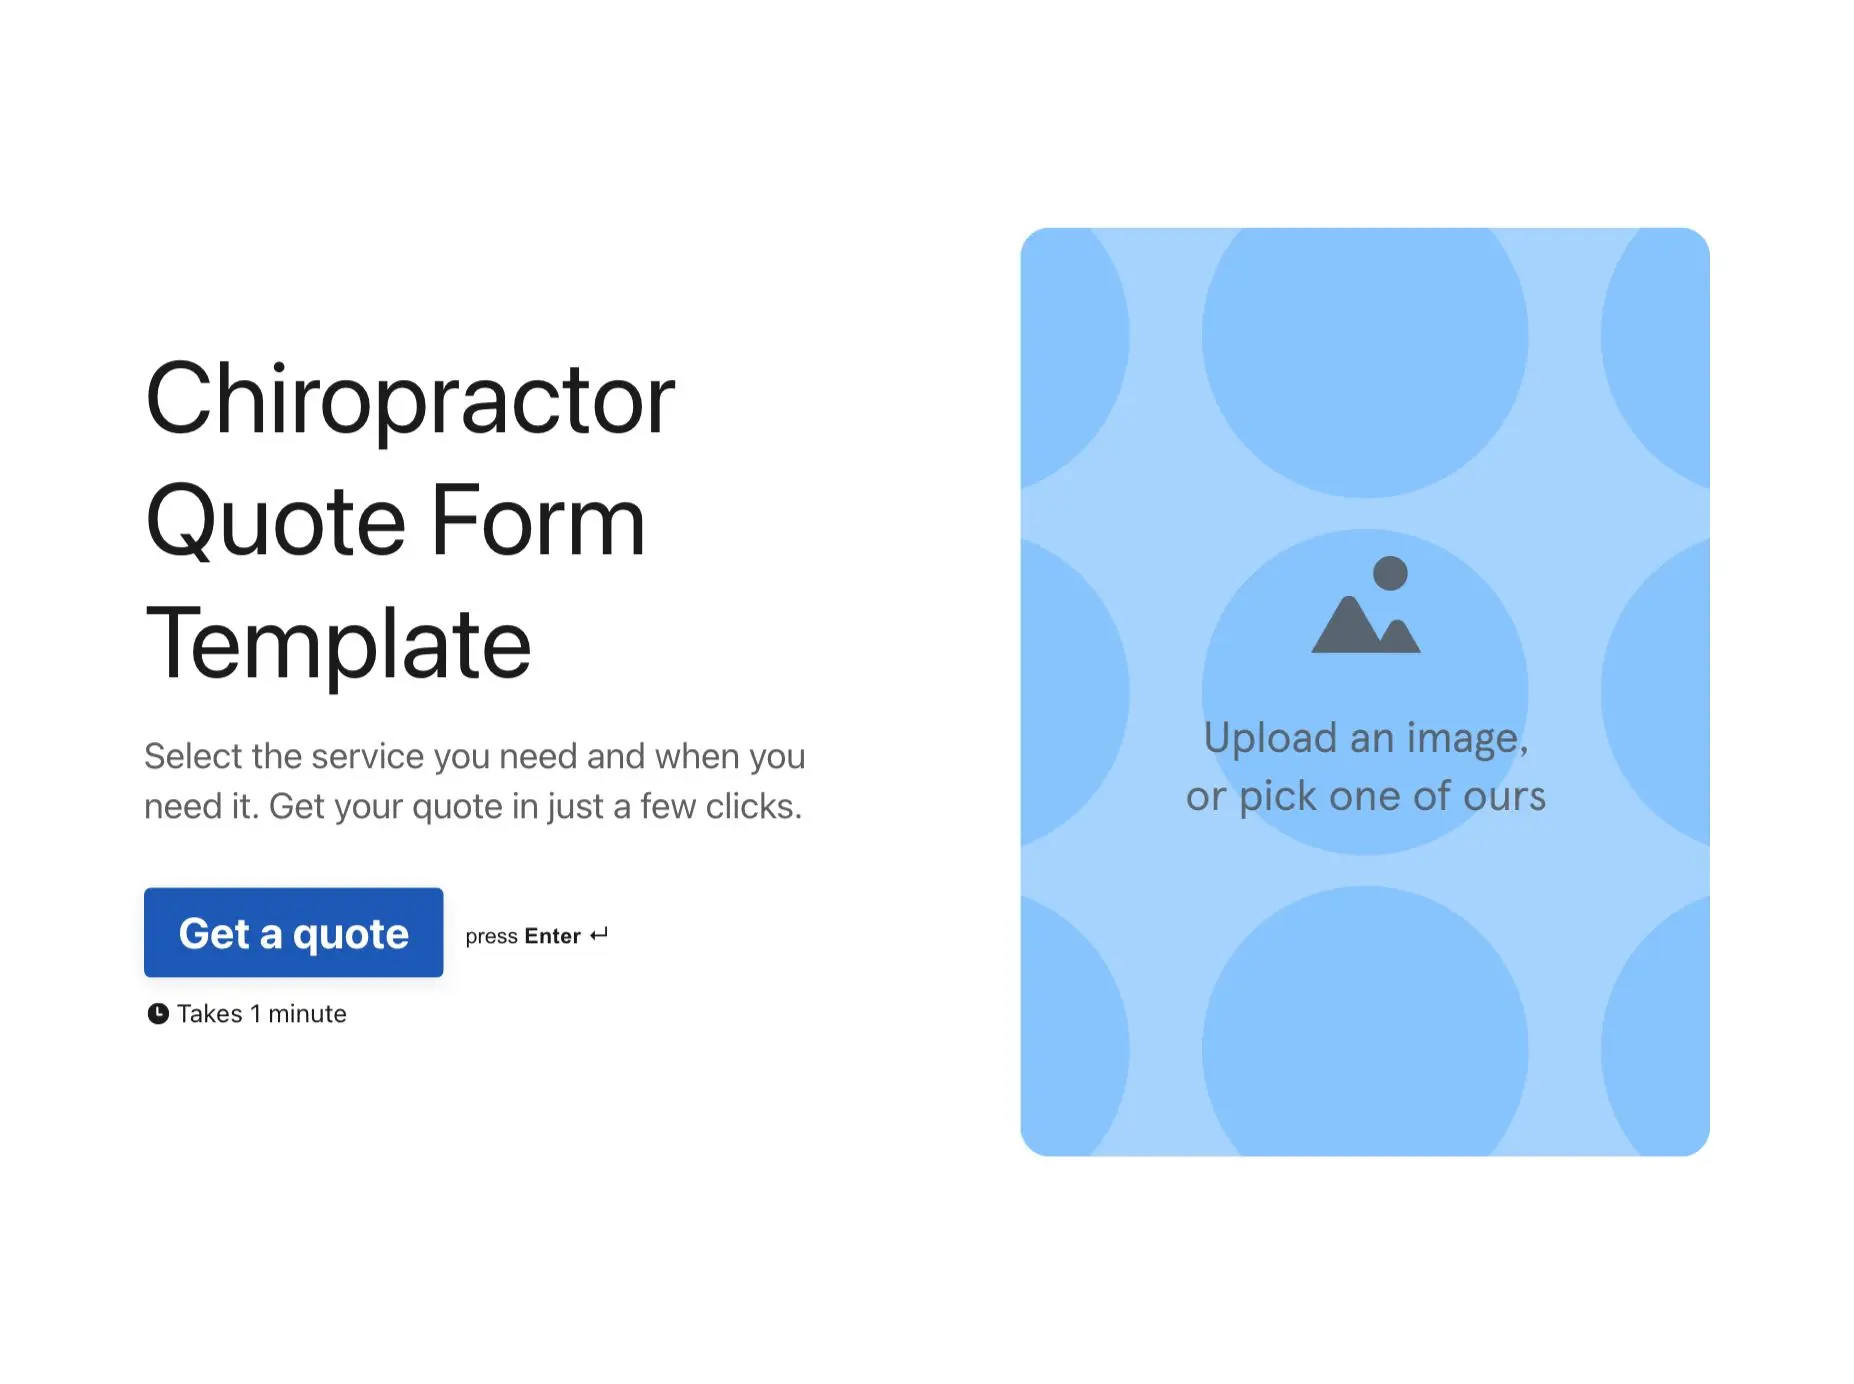 Chiropractor Quote Form Template Hero